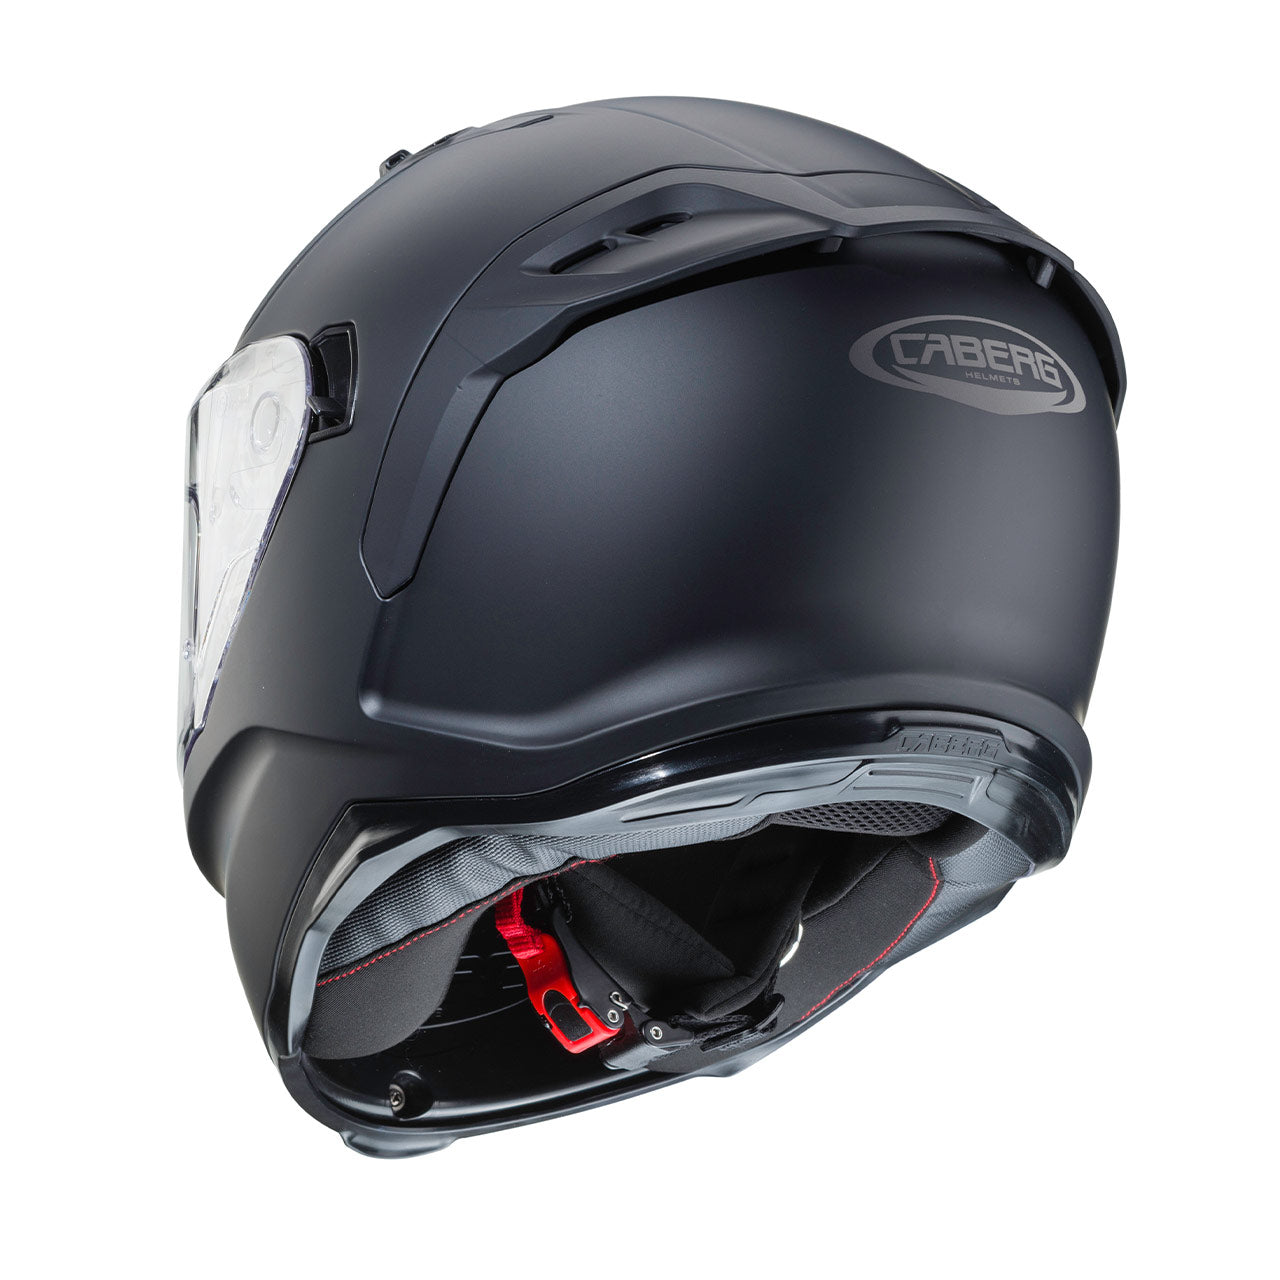 Caberg - Avalon Helmets